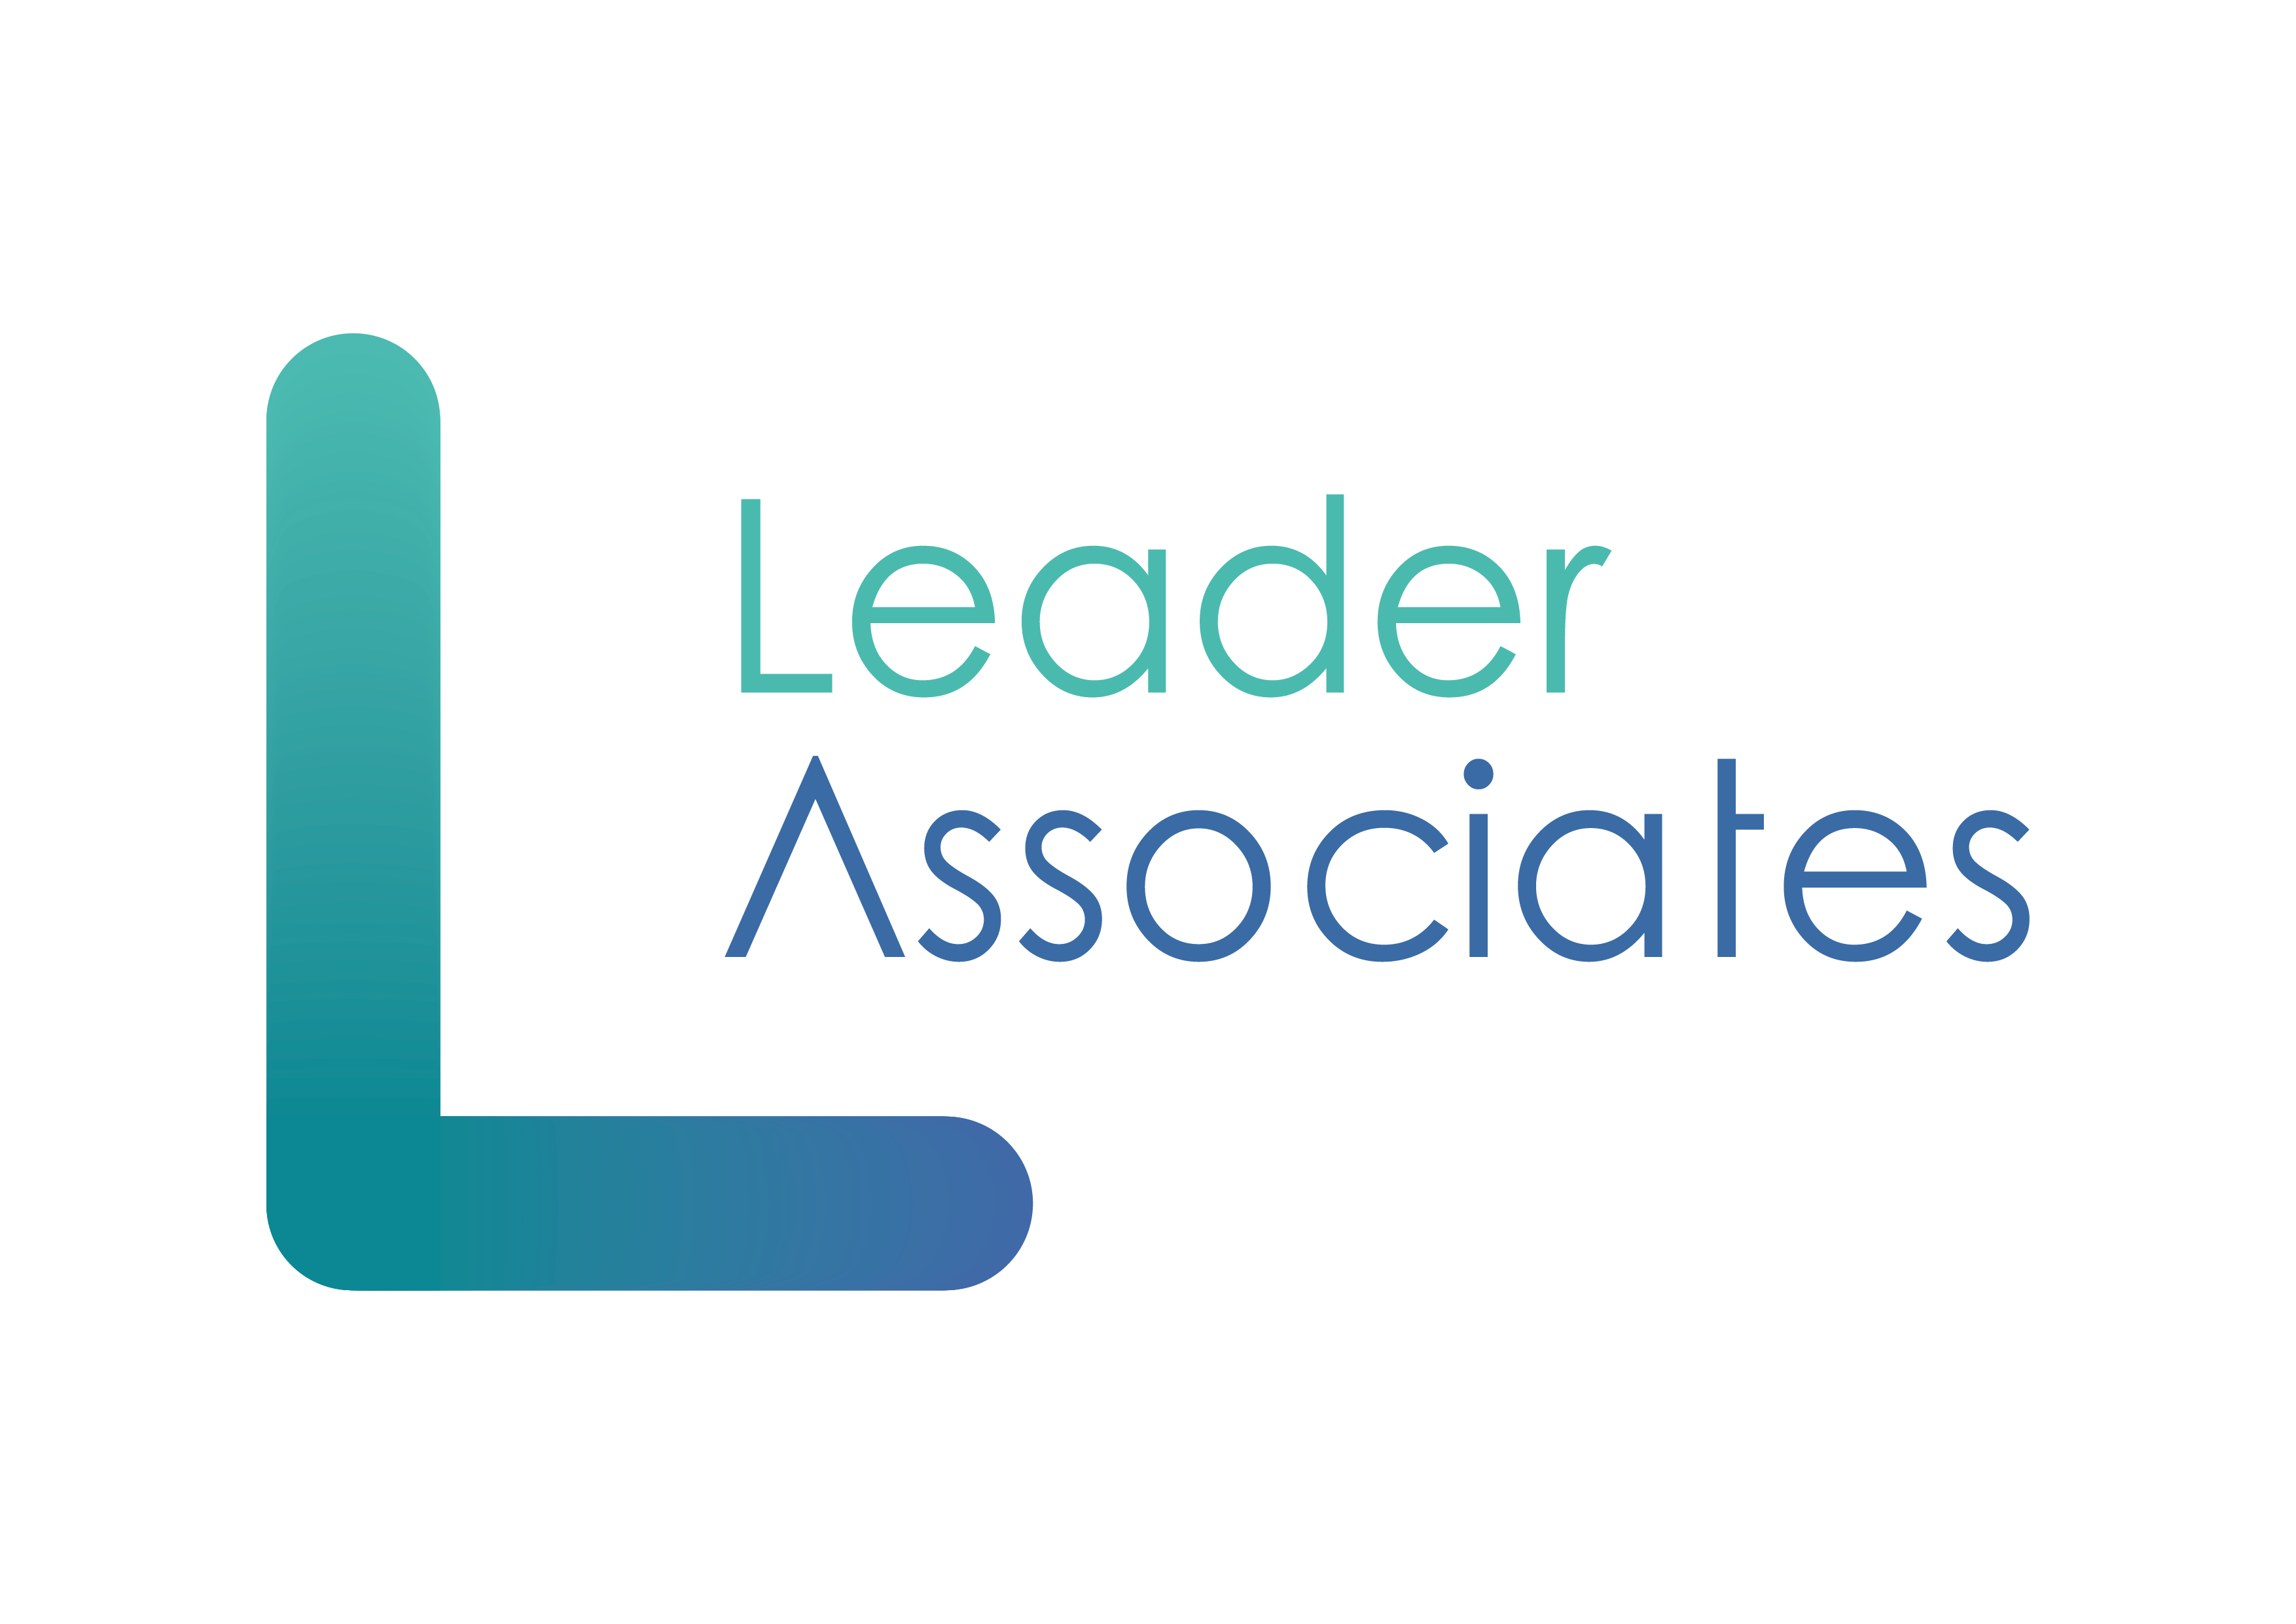 Leader Associates